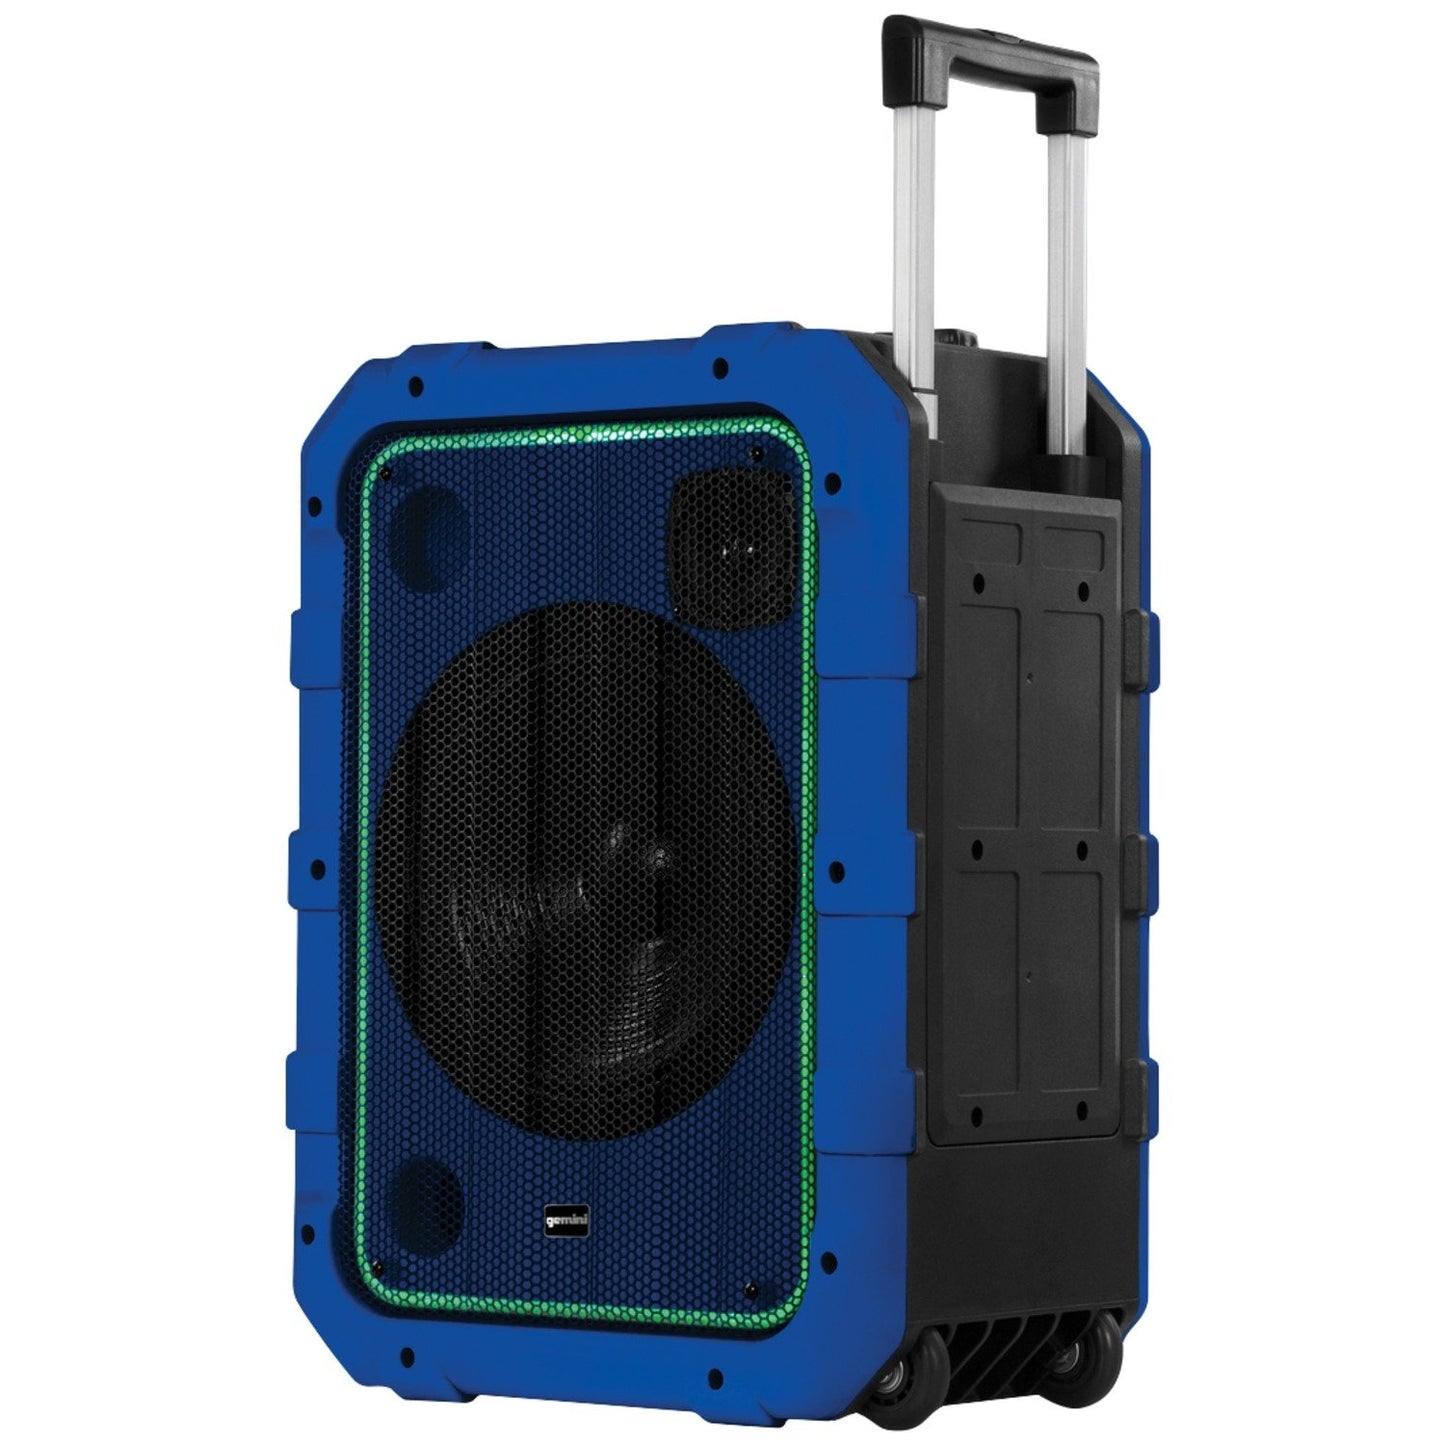 Gemini MPA-2400BLU Portable Bluetooth Party Speaker (Blue)